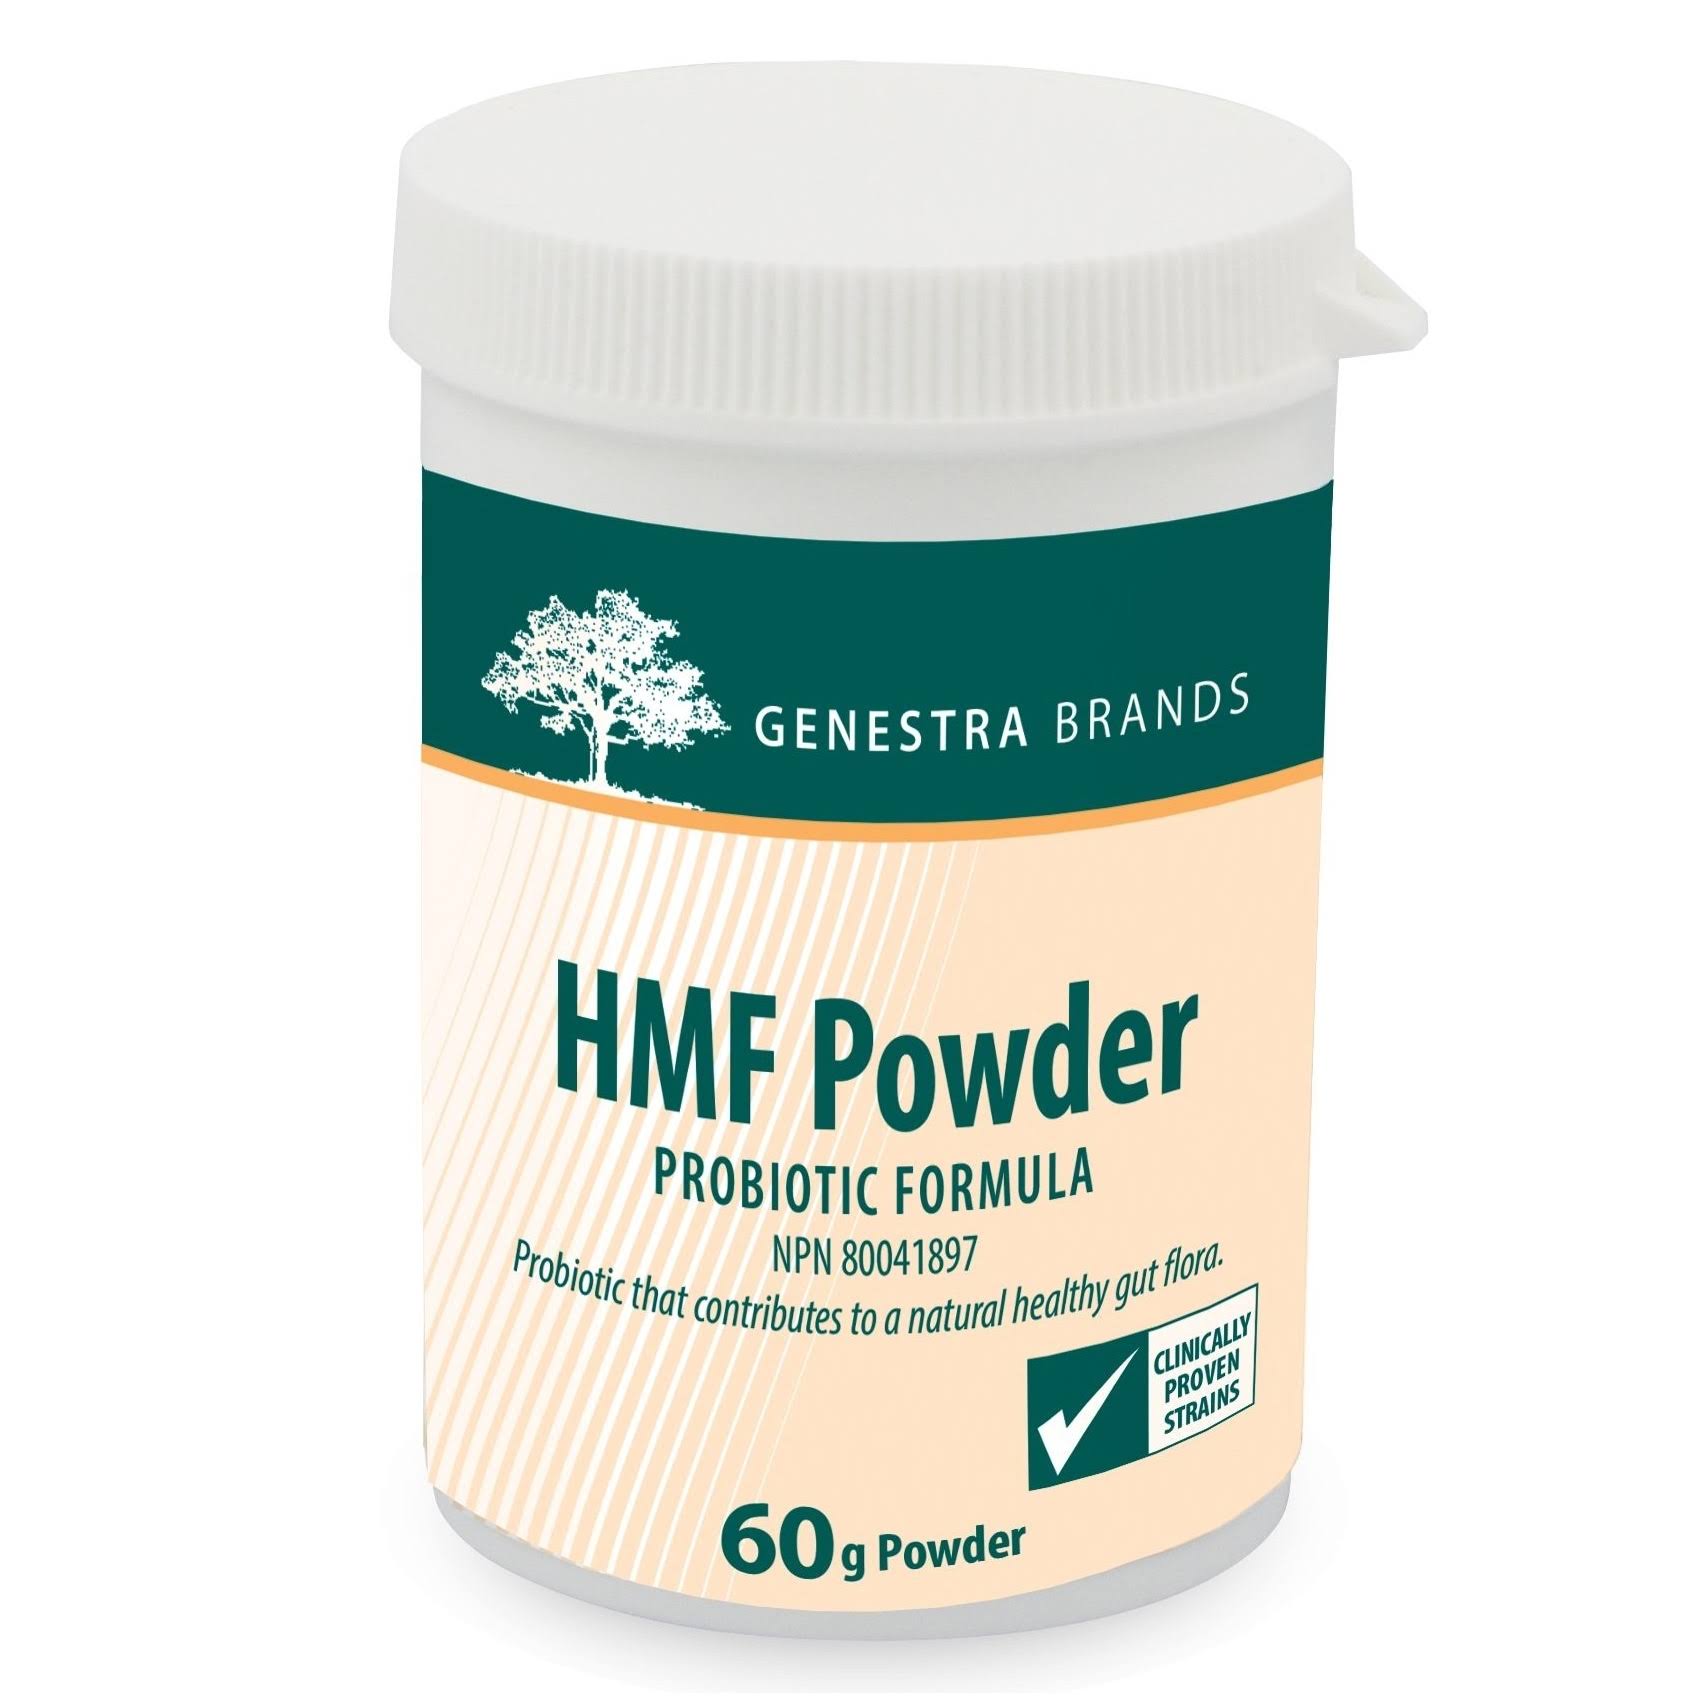 Hmf Power Probiotis Formula - 60g